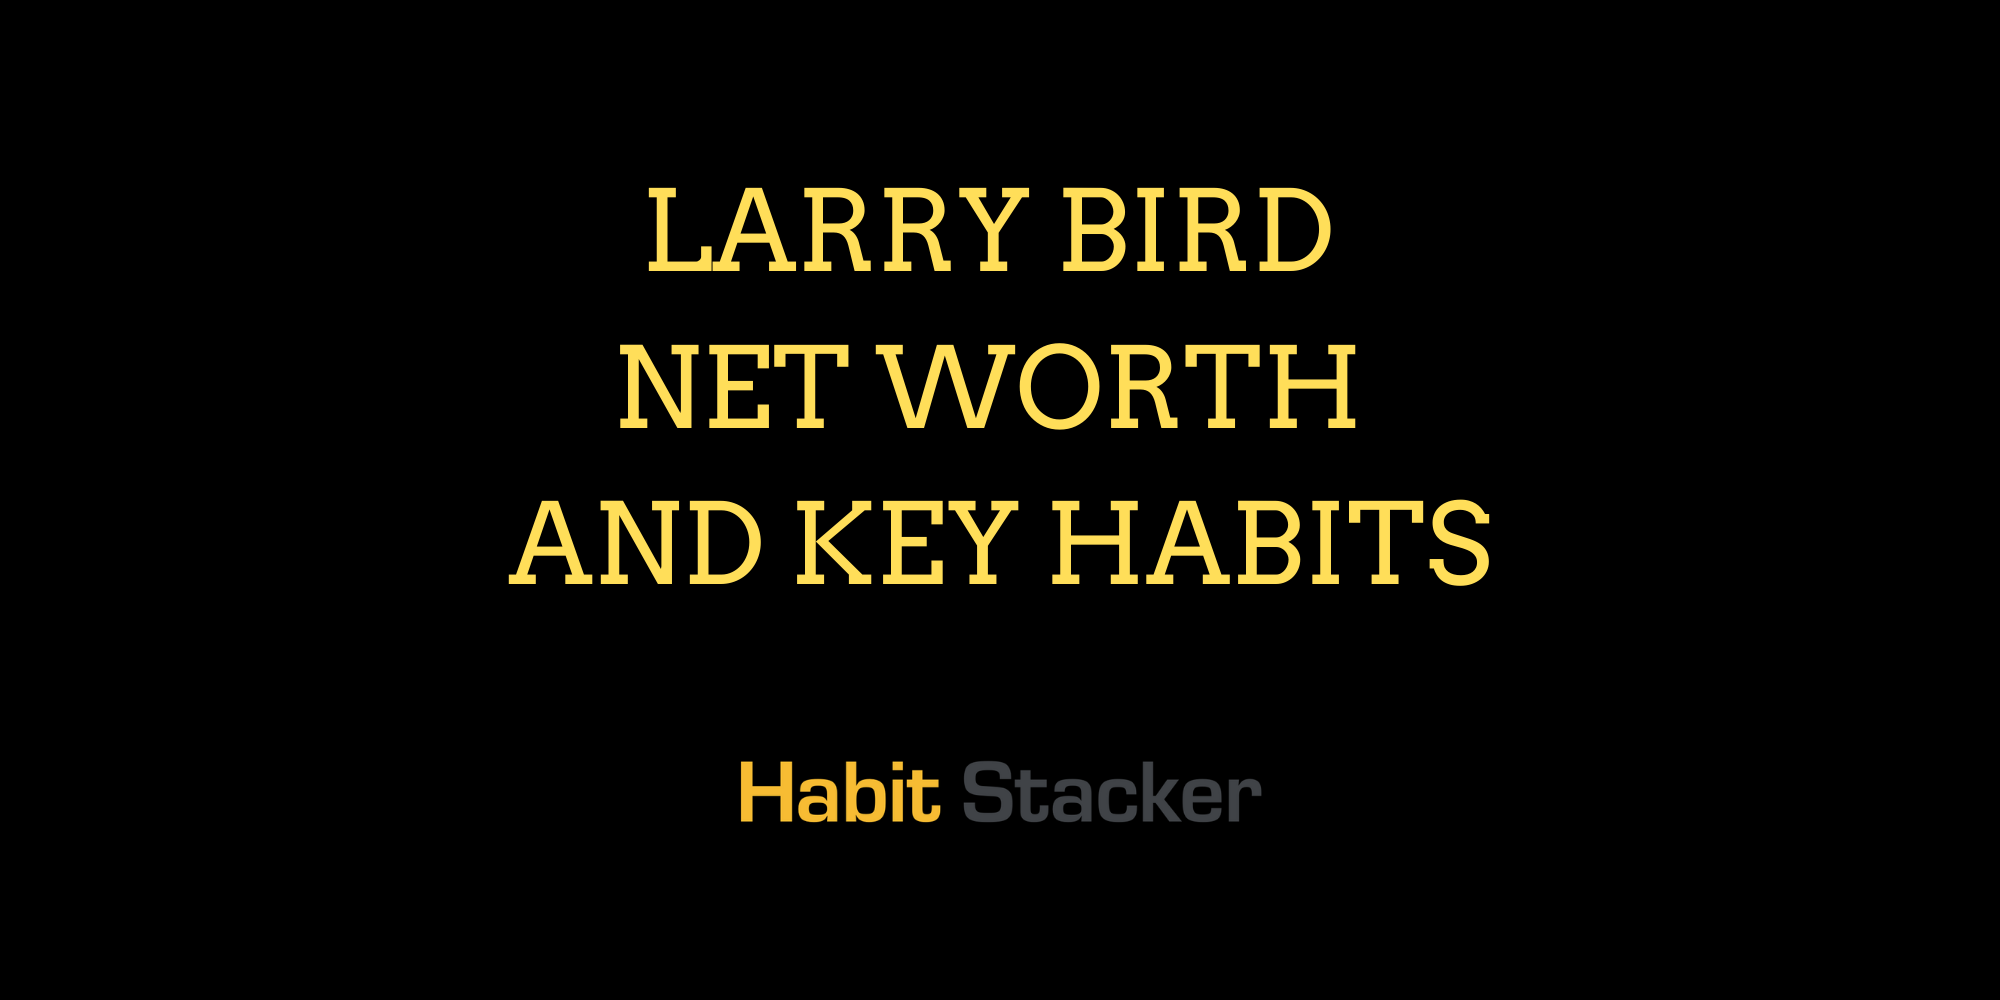 Larry Bird Net Worth and Key Habits